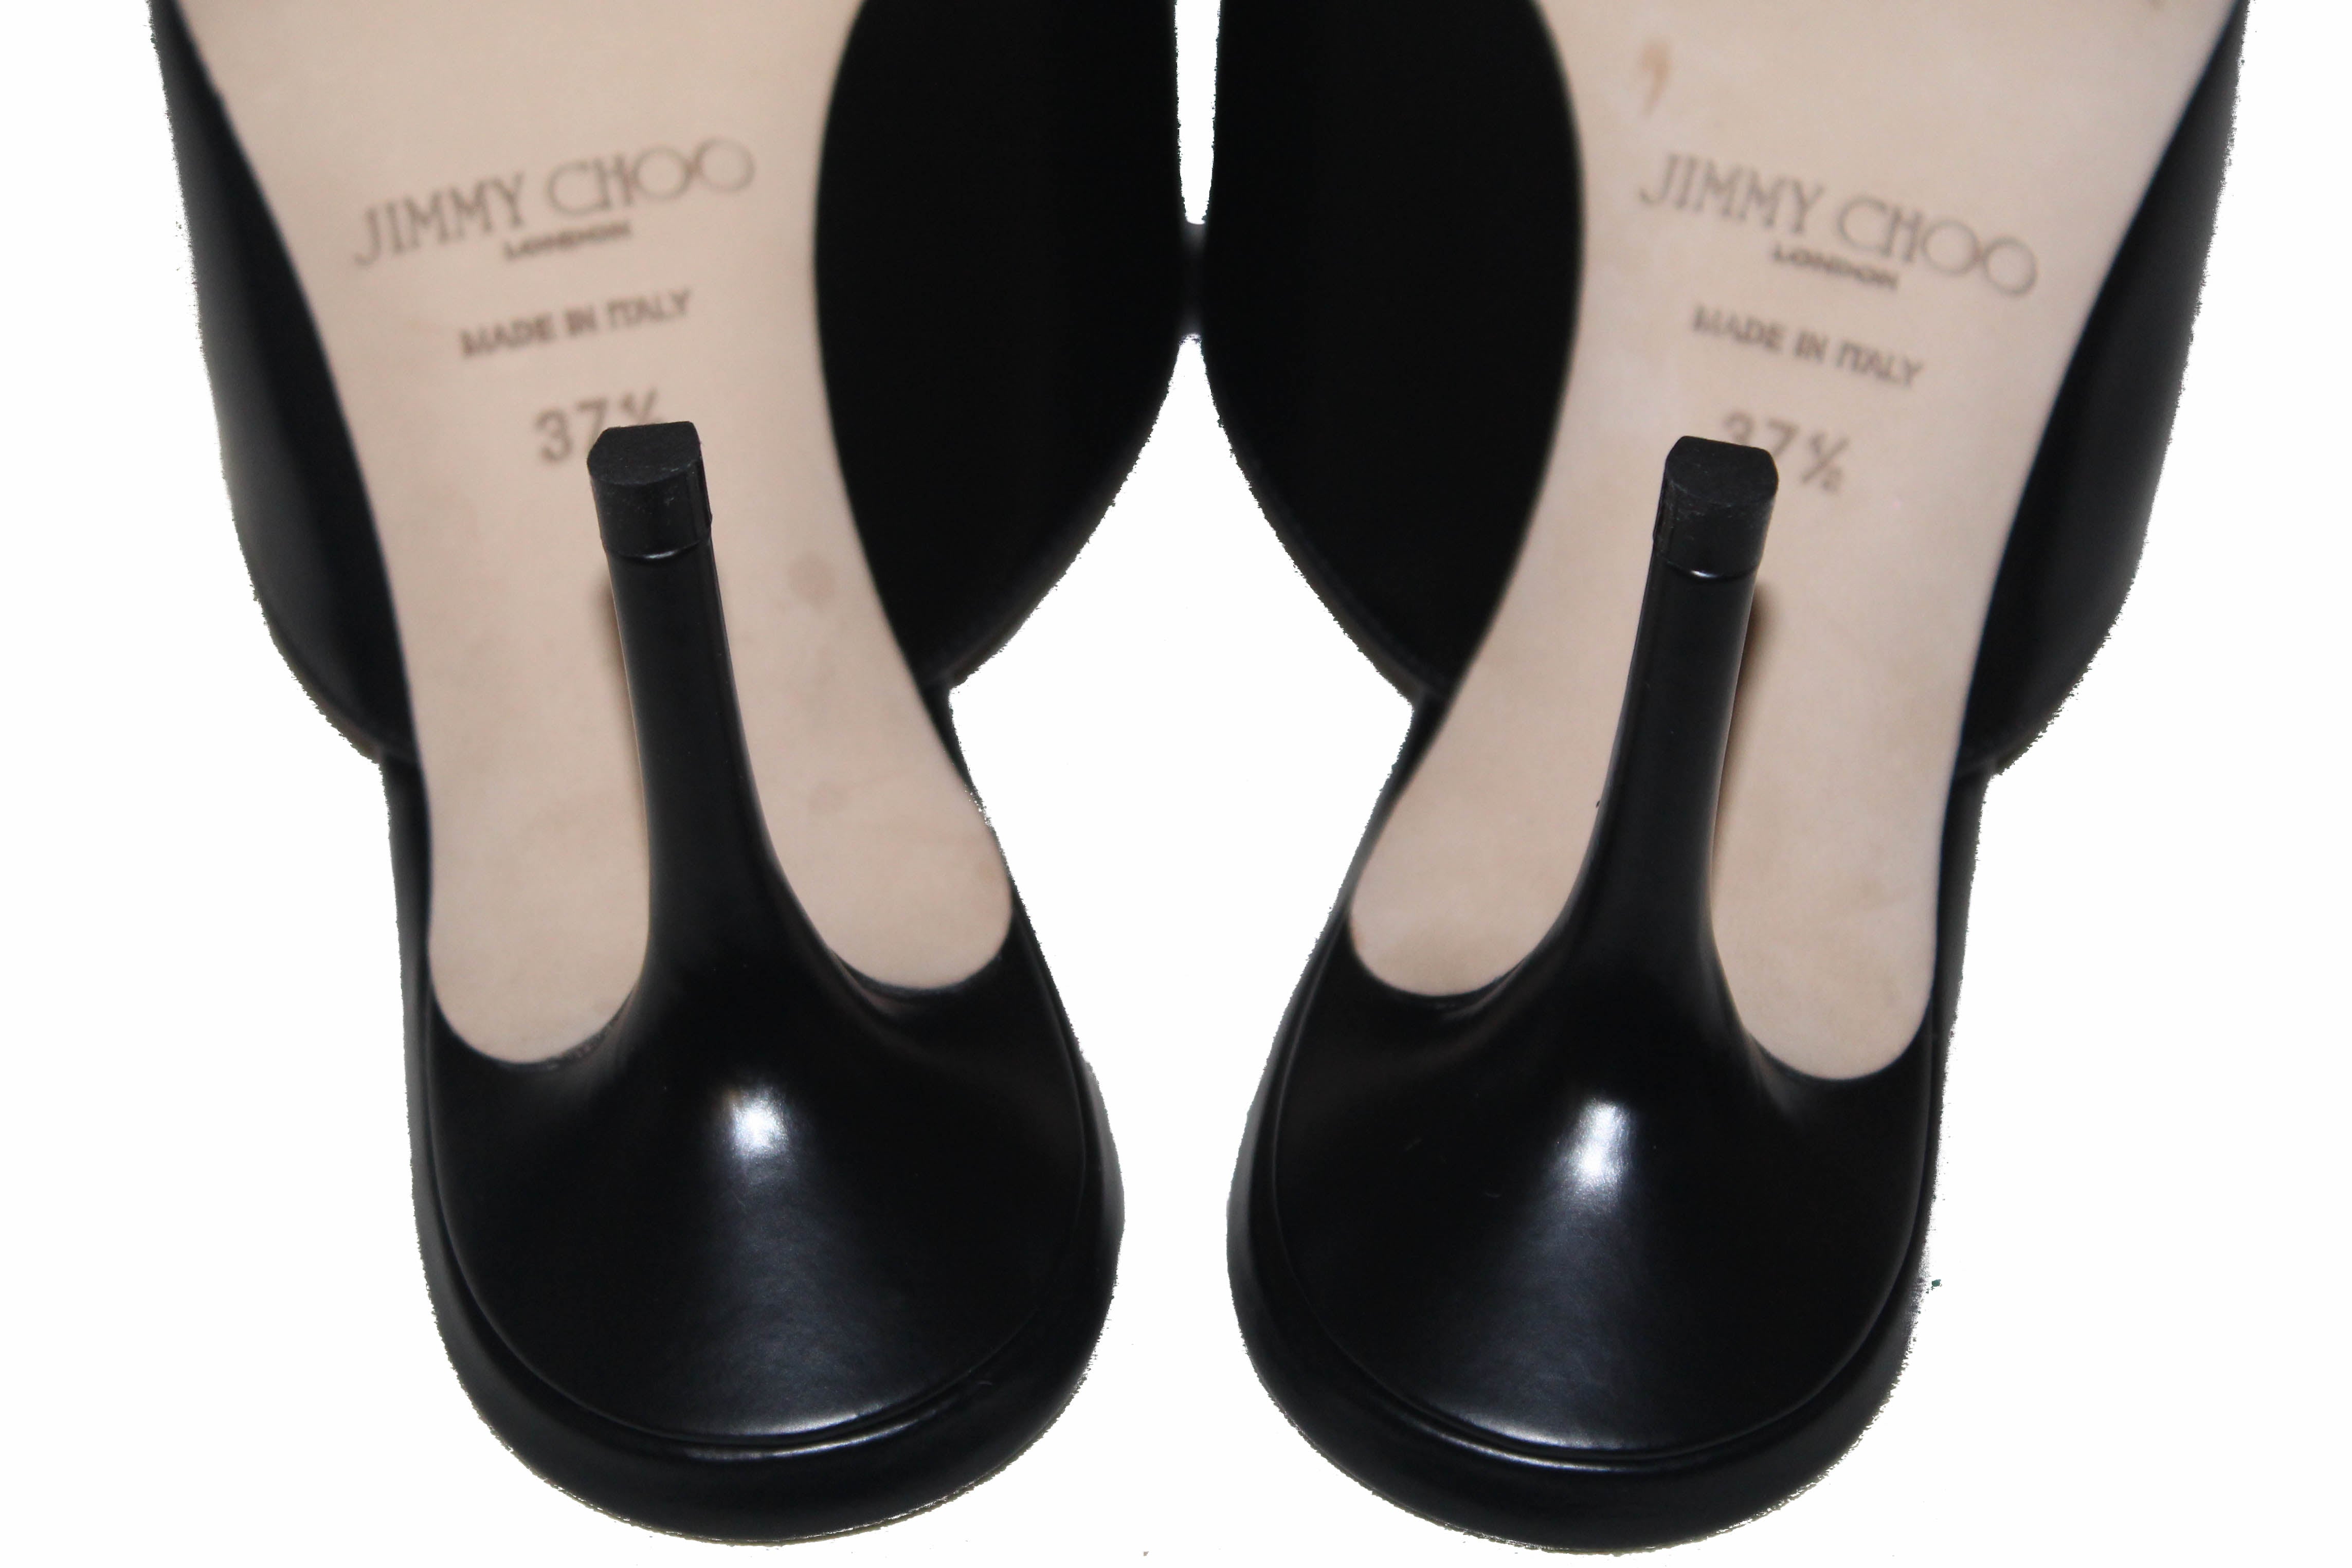 Authentic New Jimmy Choo Black Women's Rav 65 Pointed-Toe Kitten Heel Mules Size 37.5